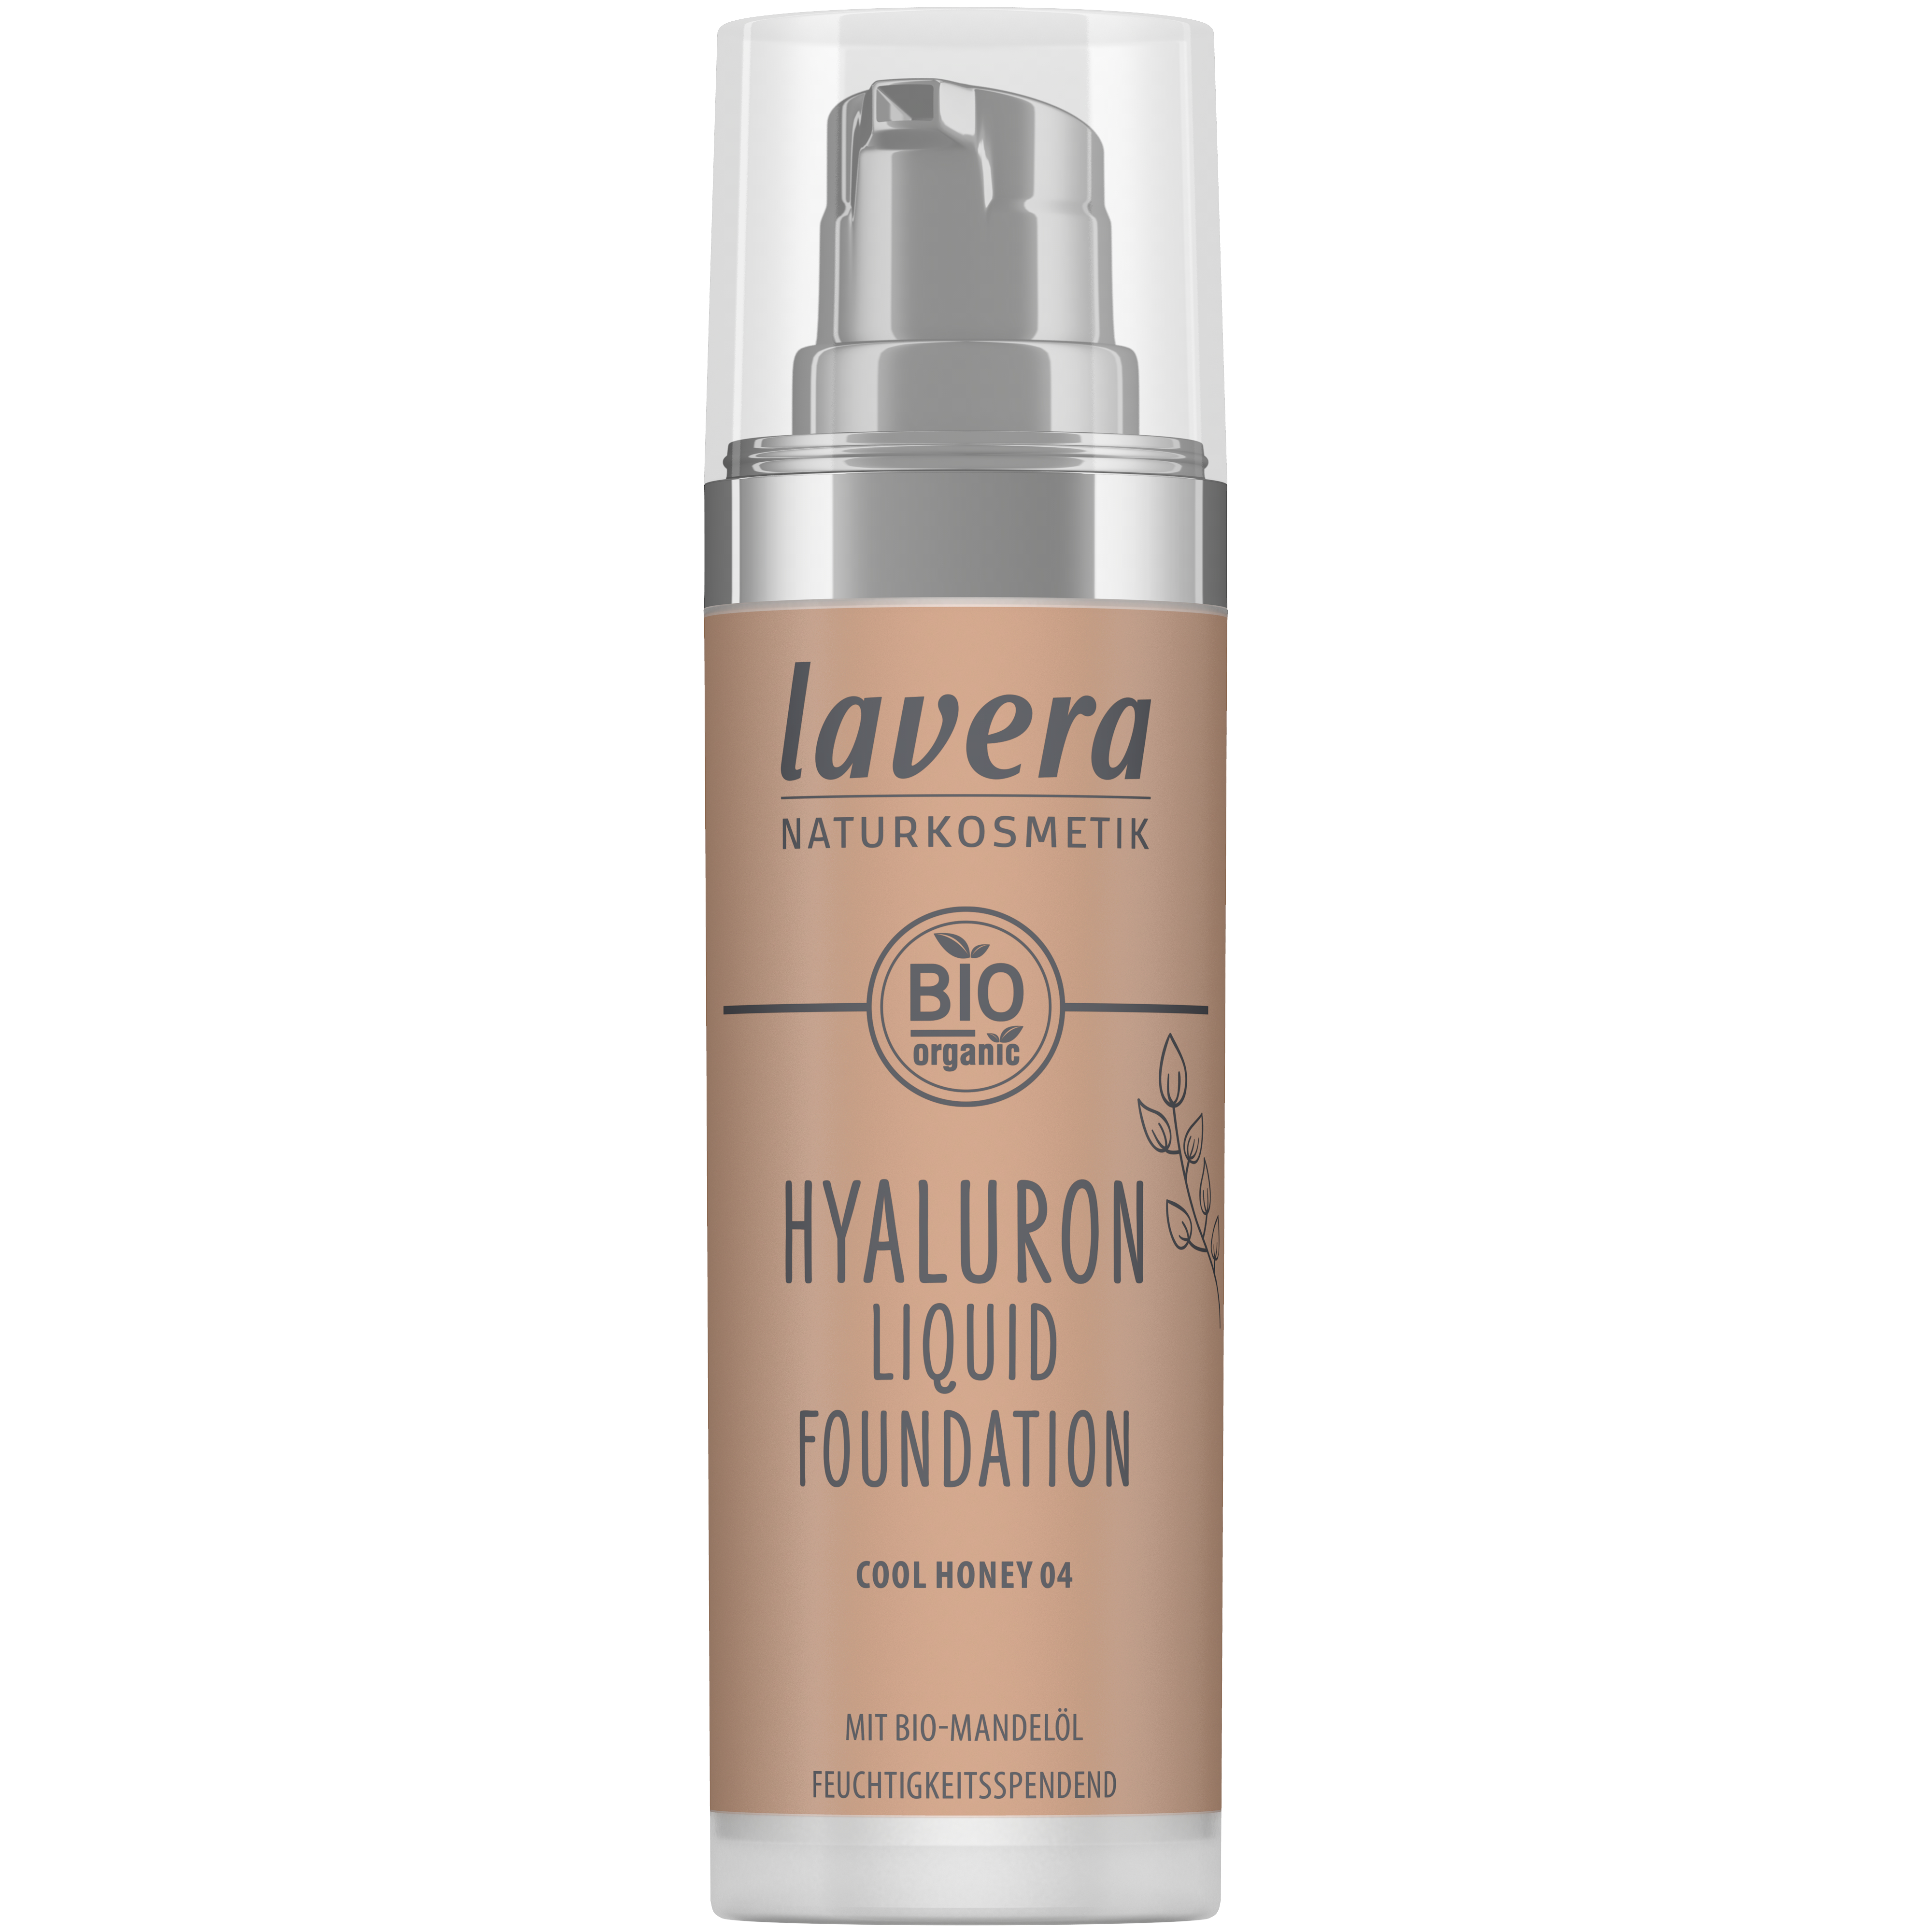 Lavera Hyaluron Liquid Foundation - Cool Honey 04